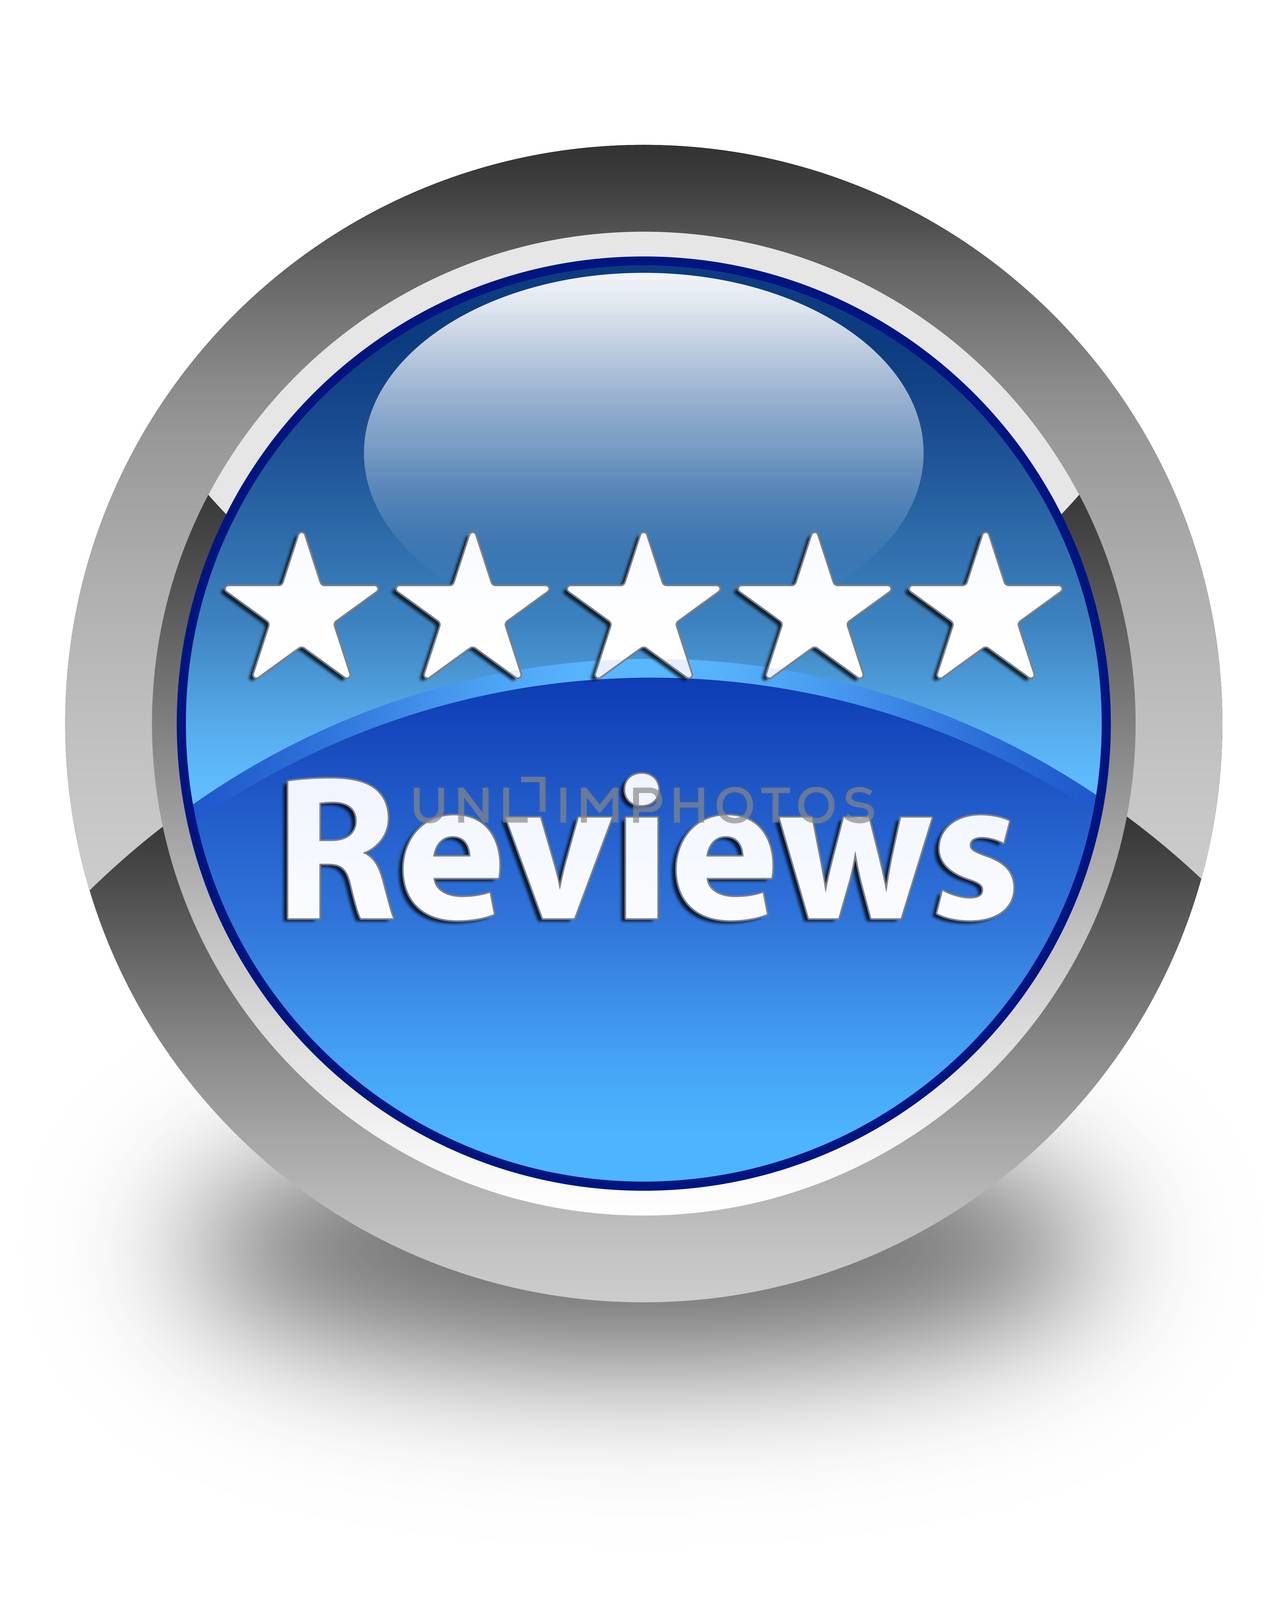 Reviews glossy blue round button by faysalfarhan